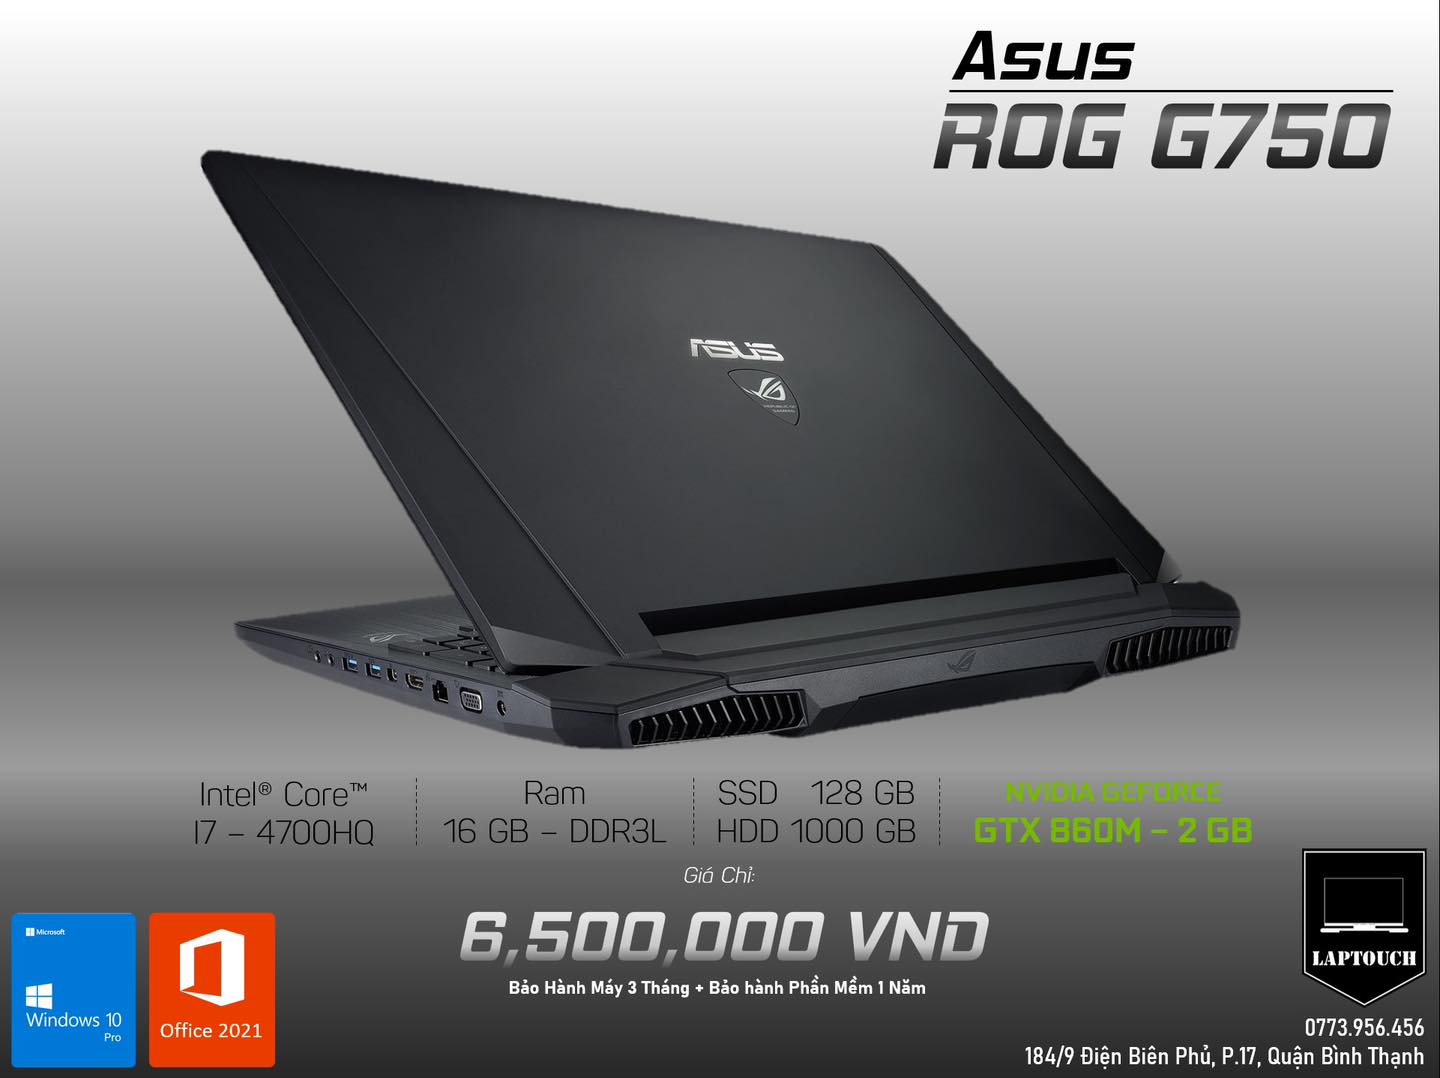 Asus ROG G750